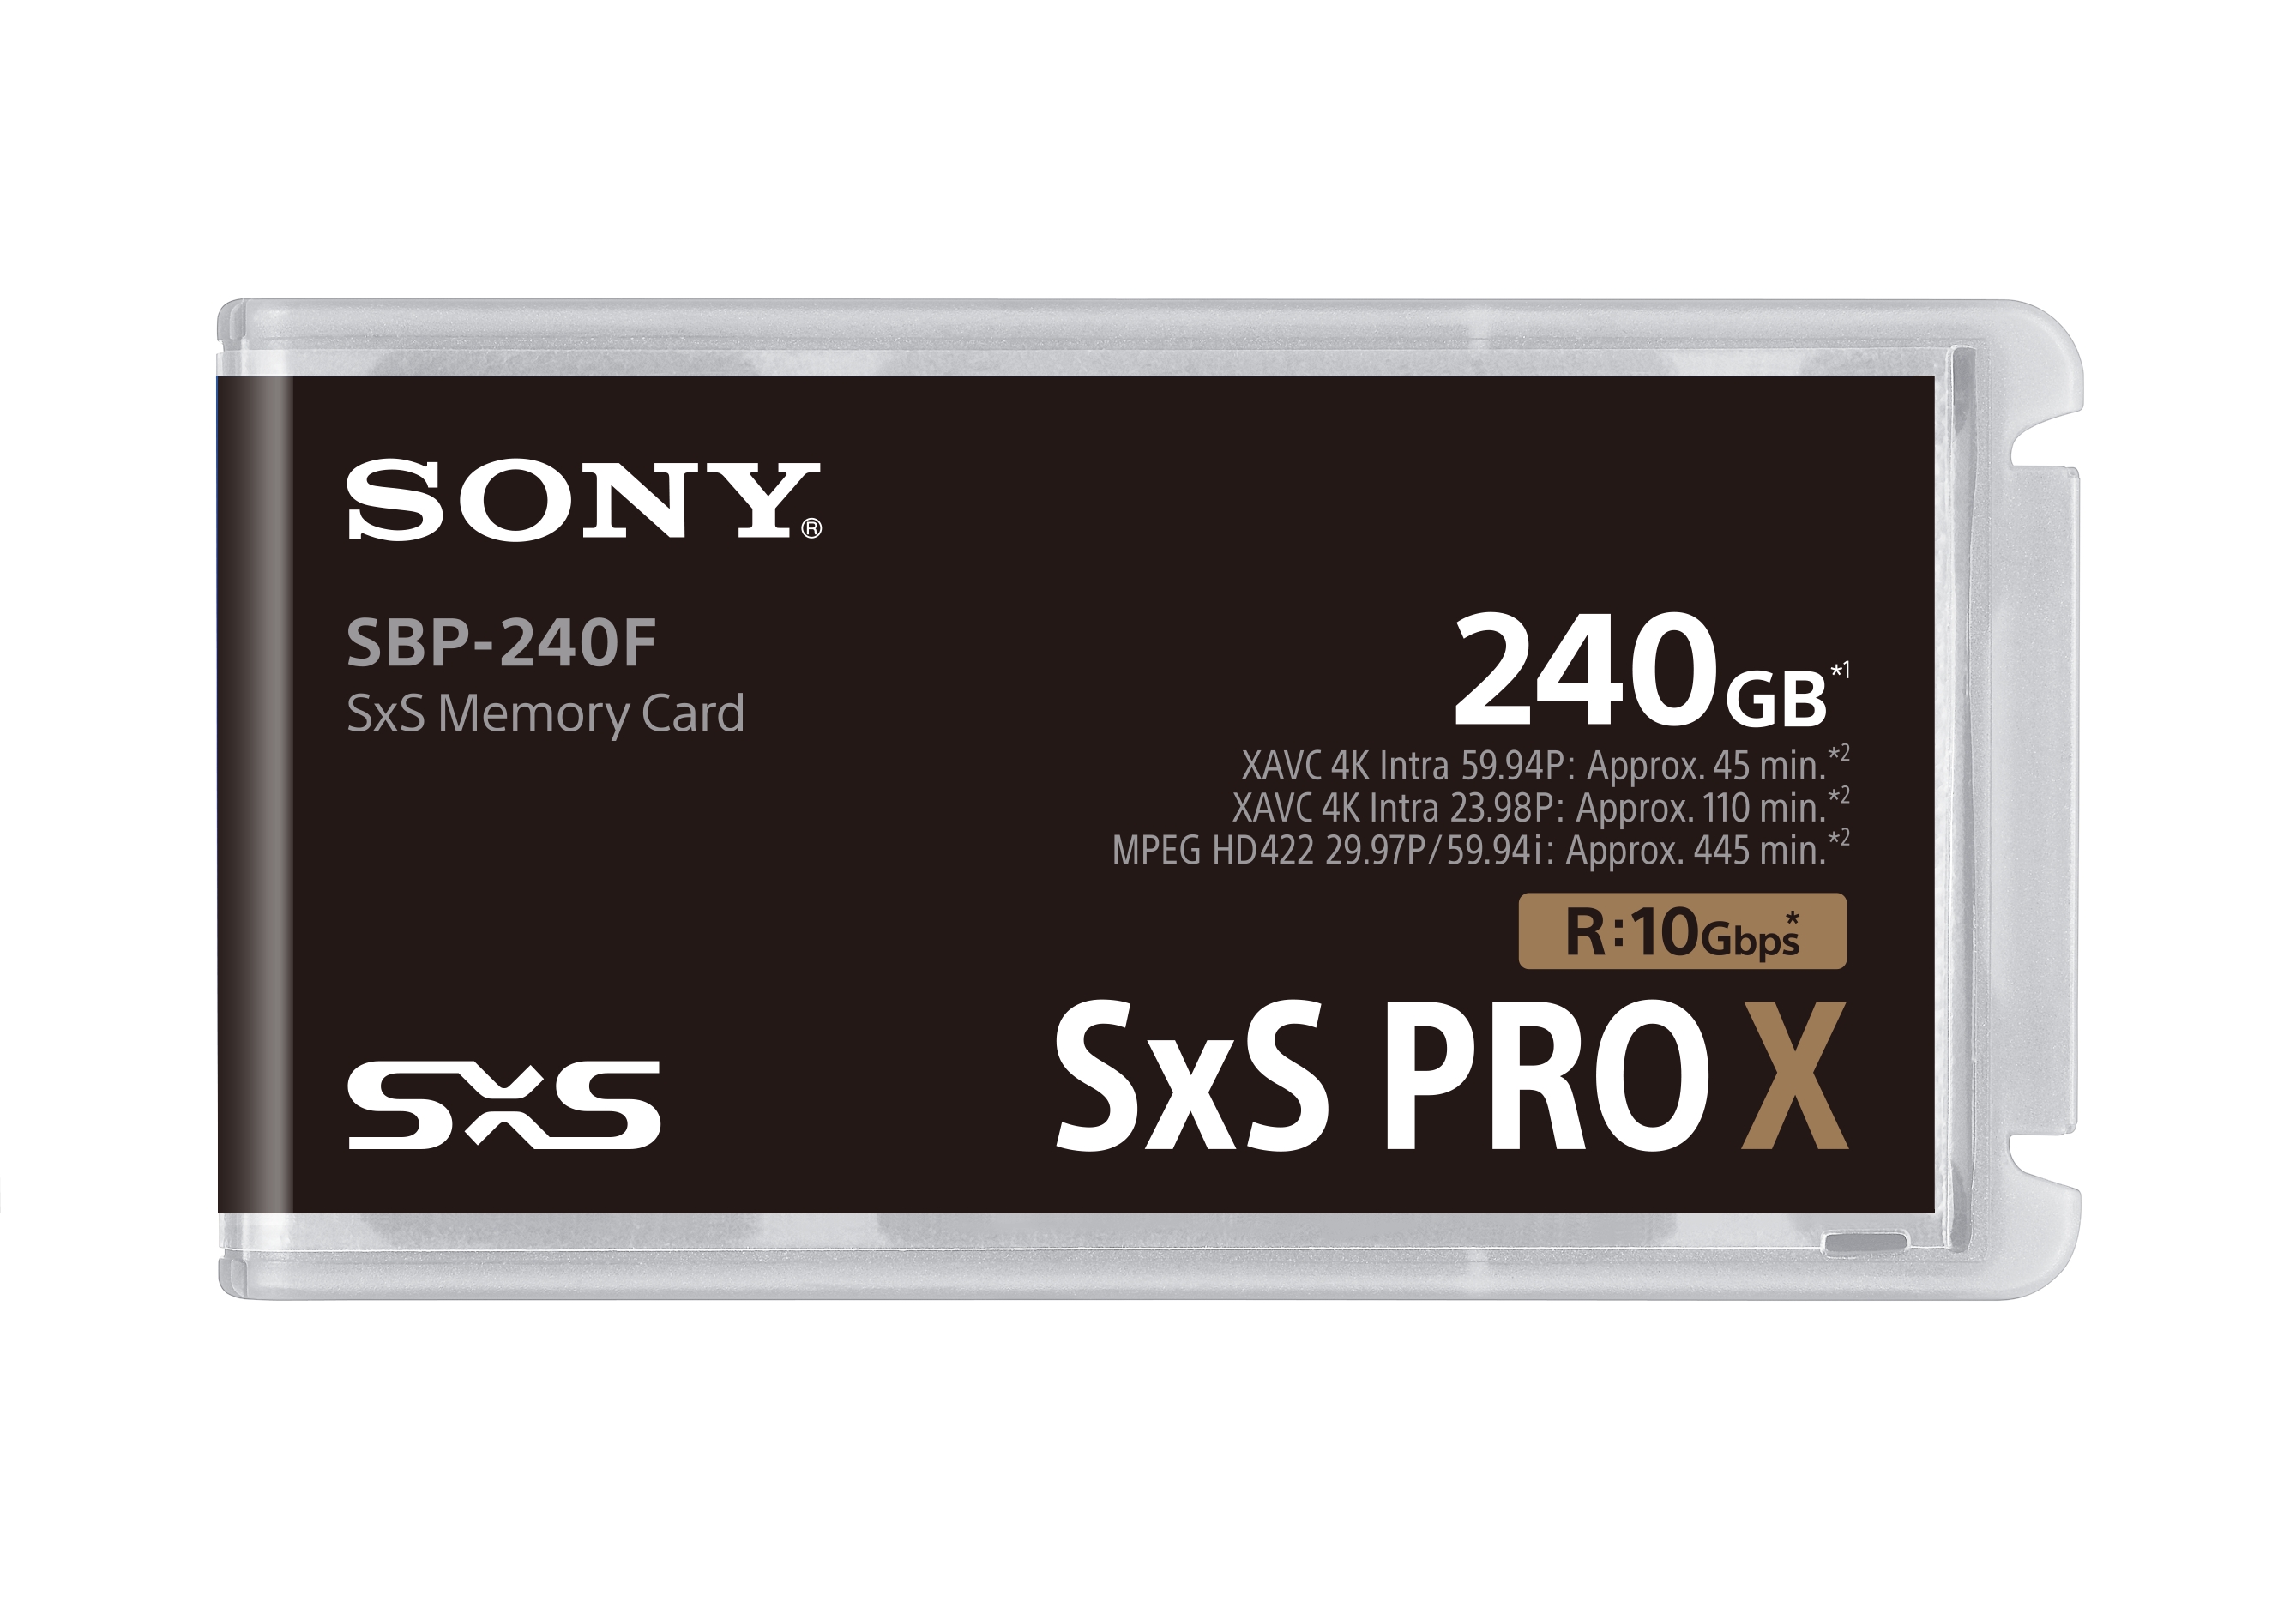 Sony Professional SxS Pro-X Memory Card 240Gb - Successor of SBP-240F